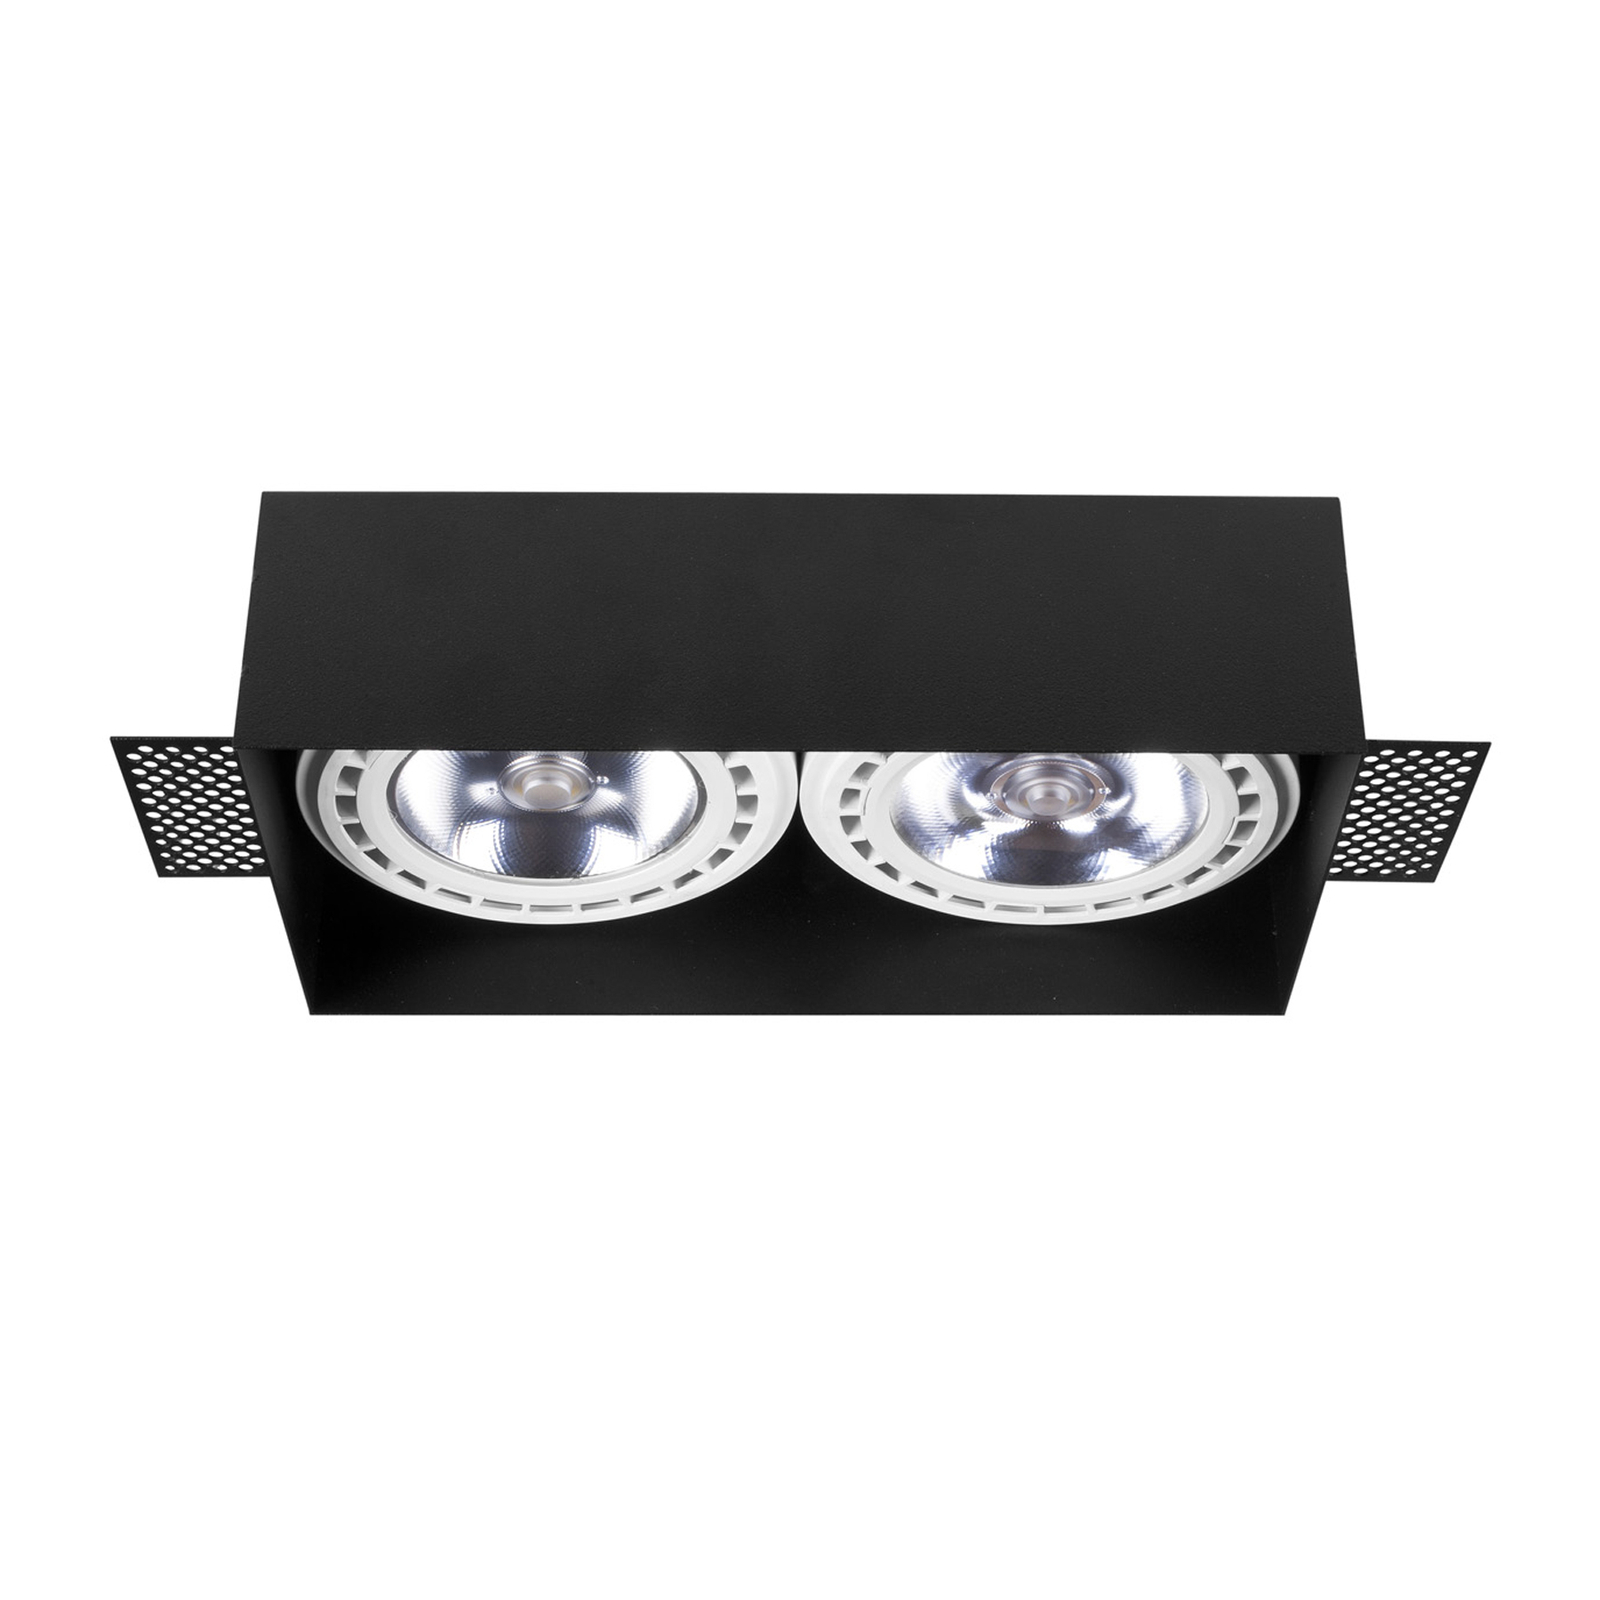 Innfelt spotlight Mod Plus II, 2 lyskilder, svart